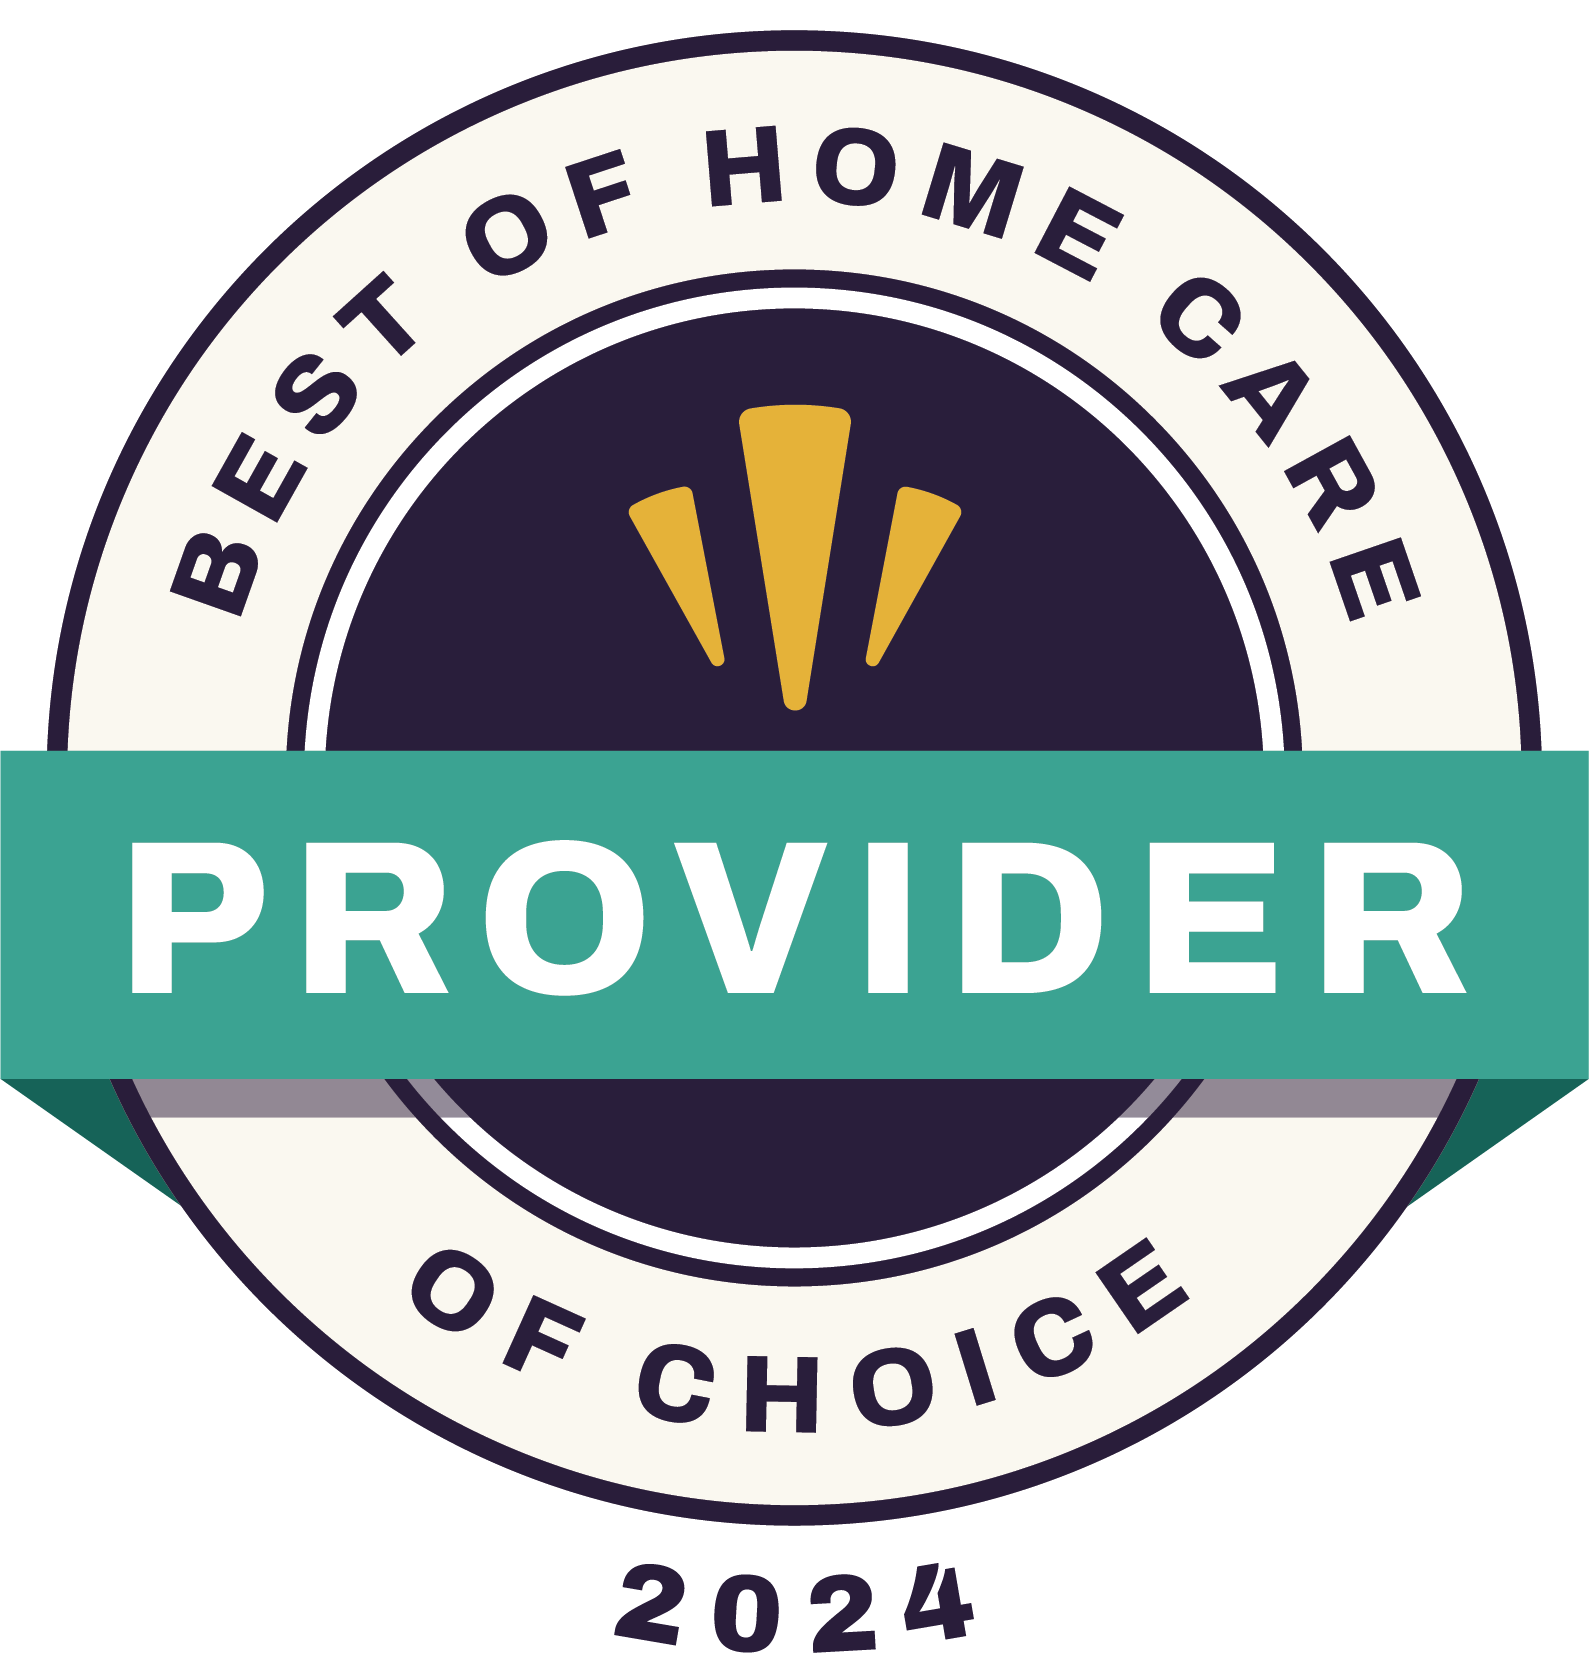 HCP Provider of Choice Award